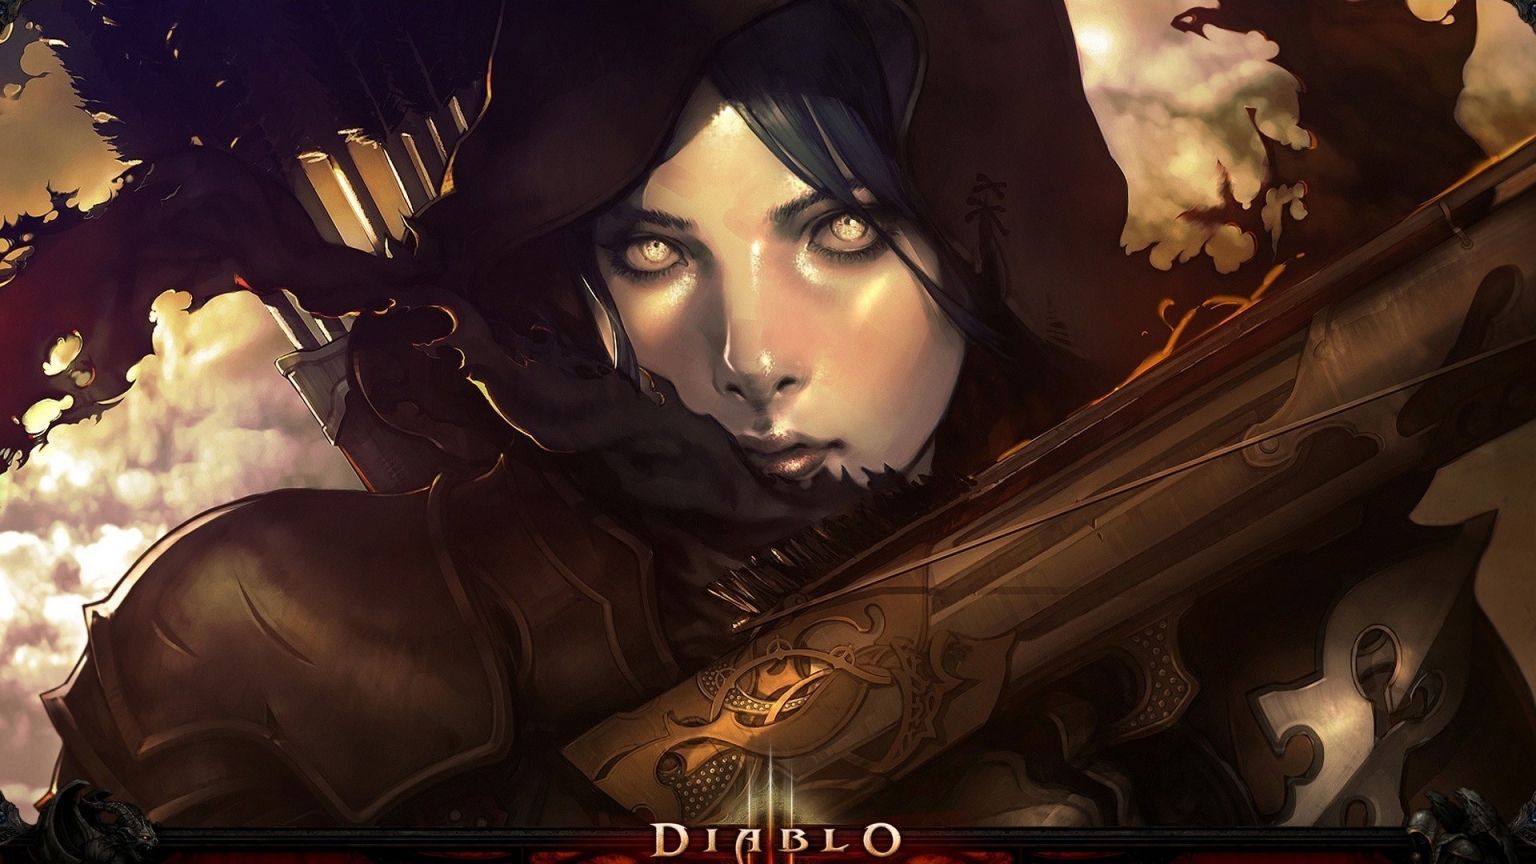 Diablo III Character for 1536 x 864 HDTV resolution